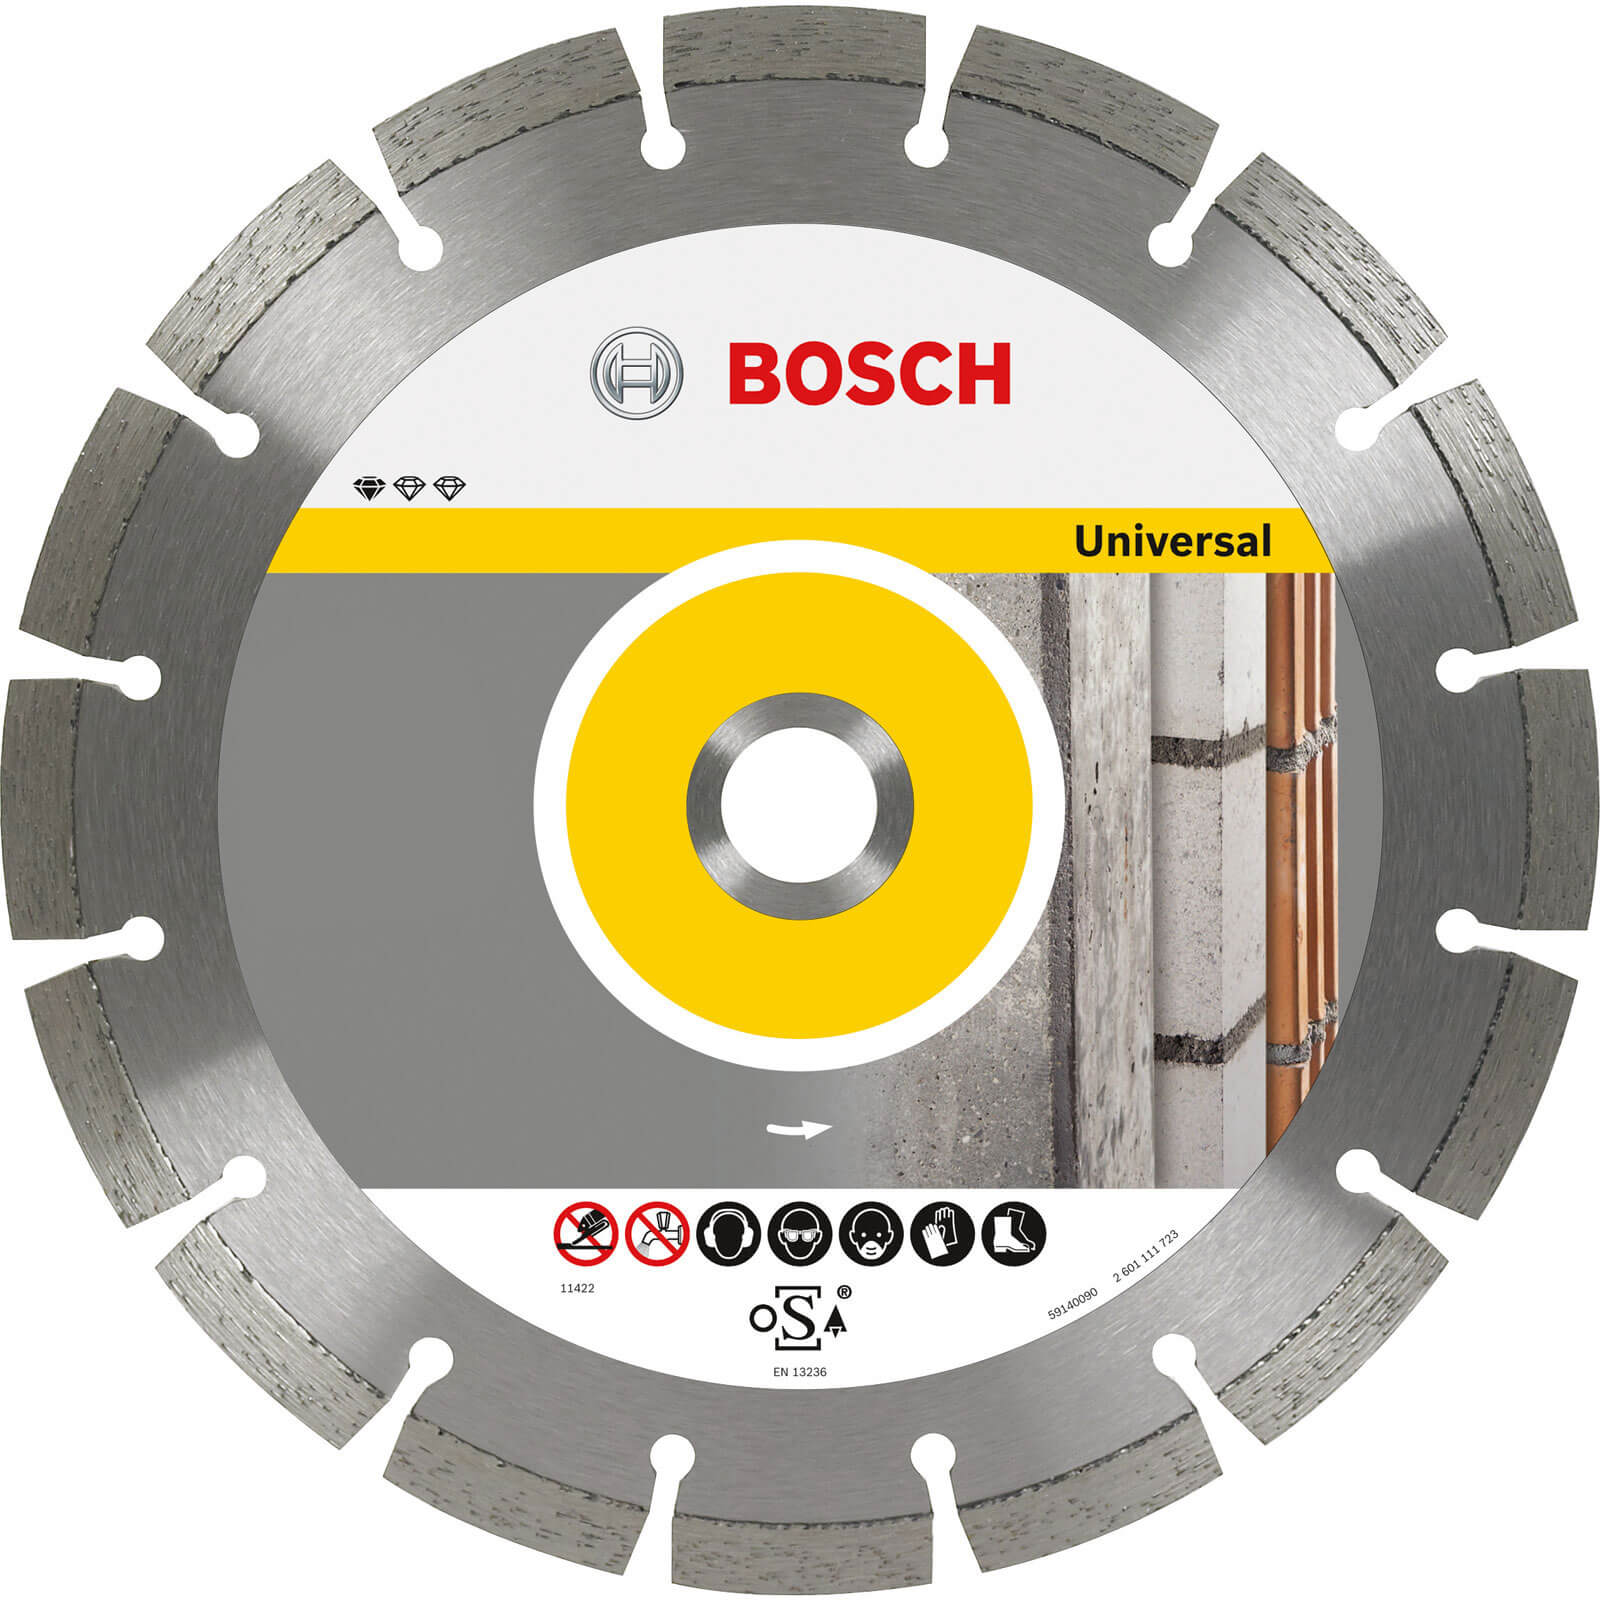 Bosch 115mm Universal Diamond Cutting Blade